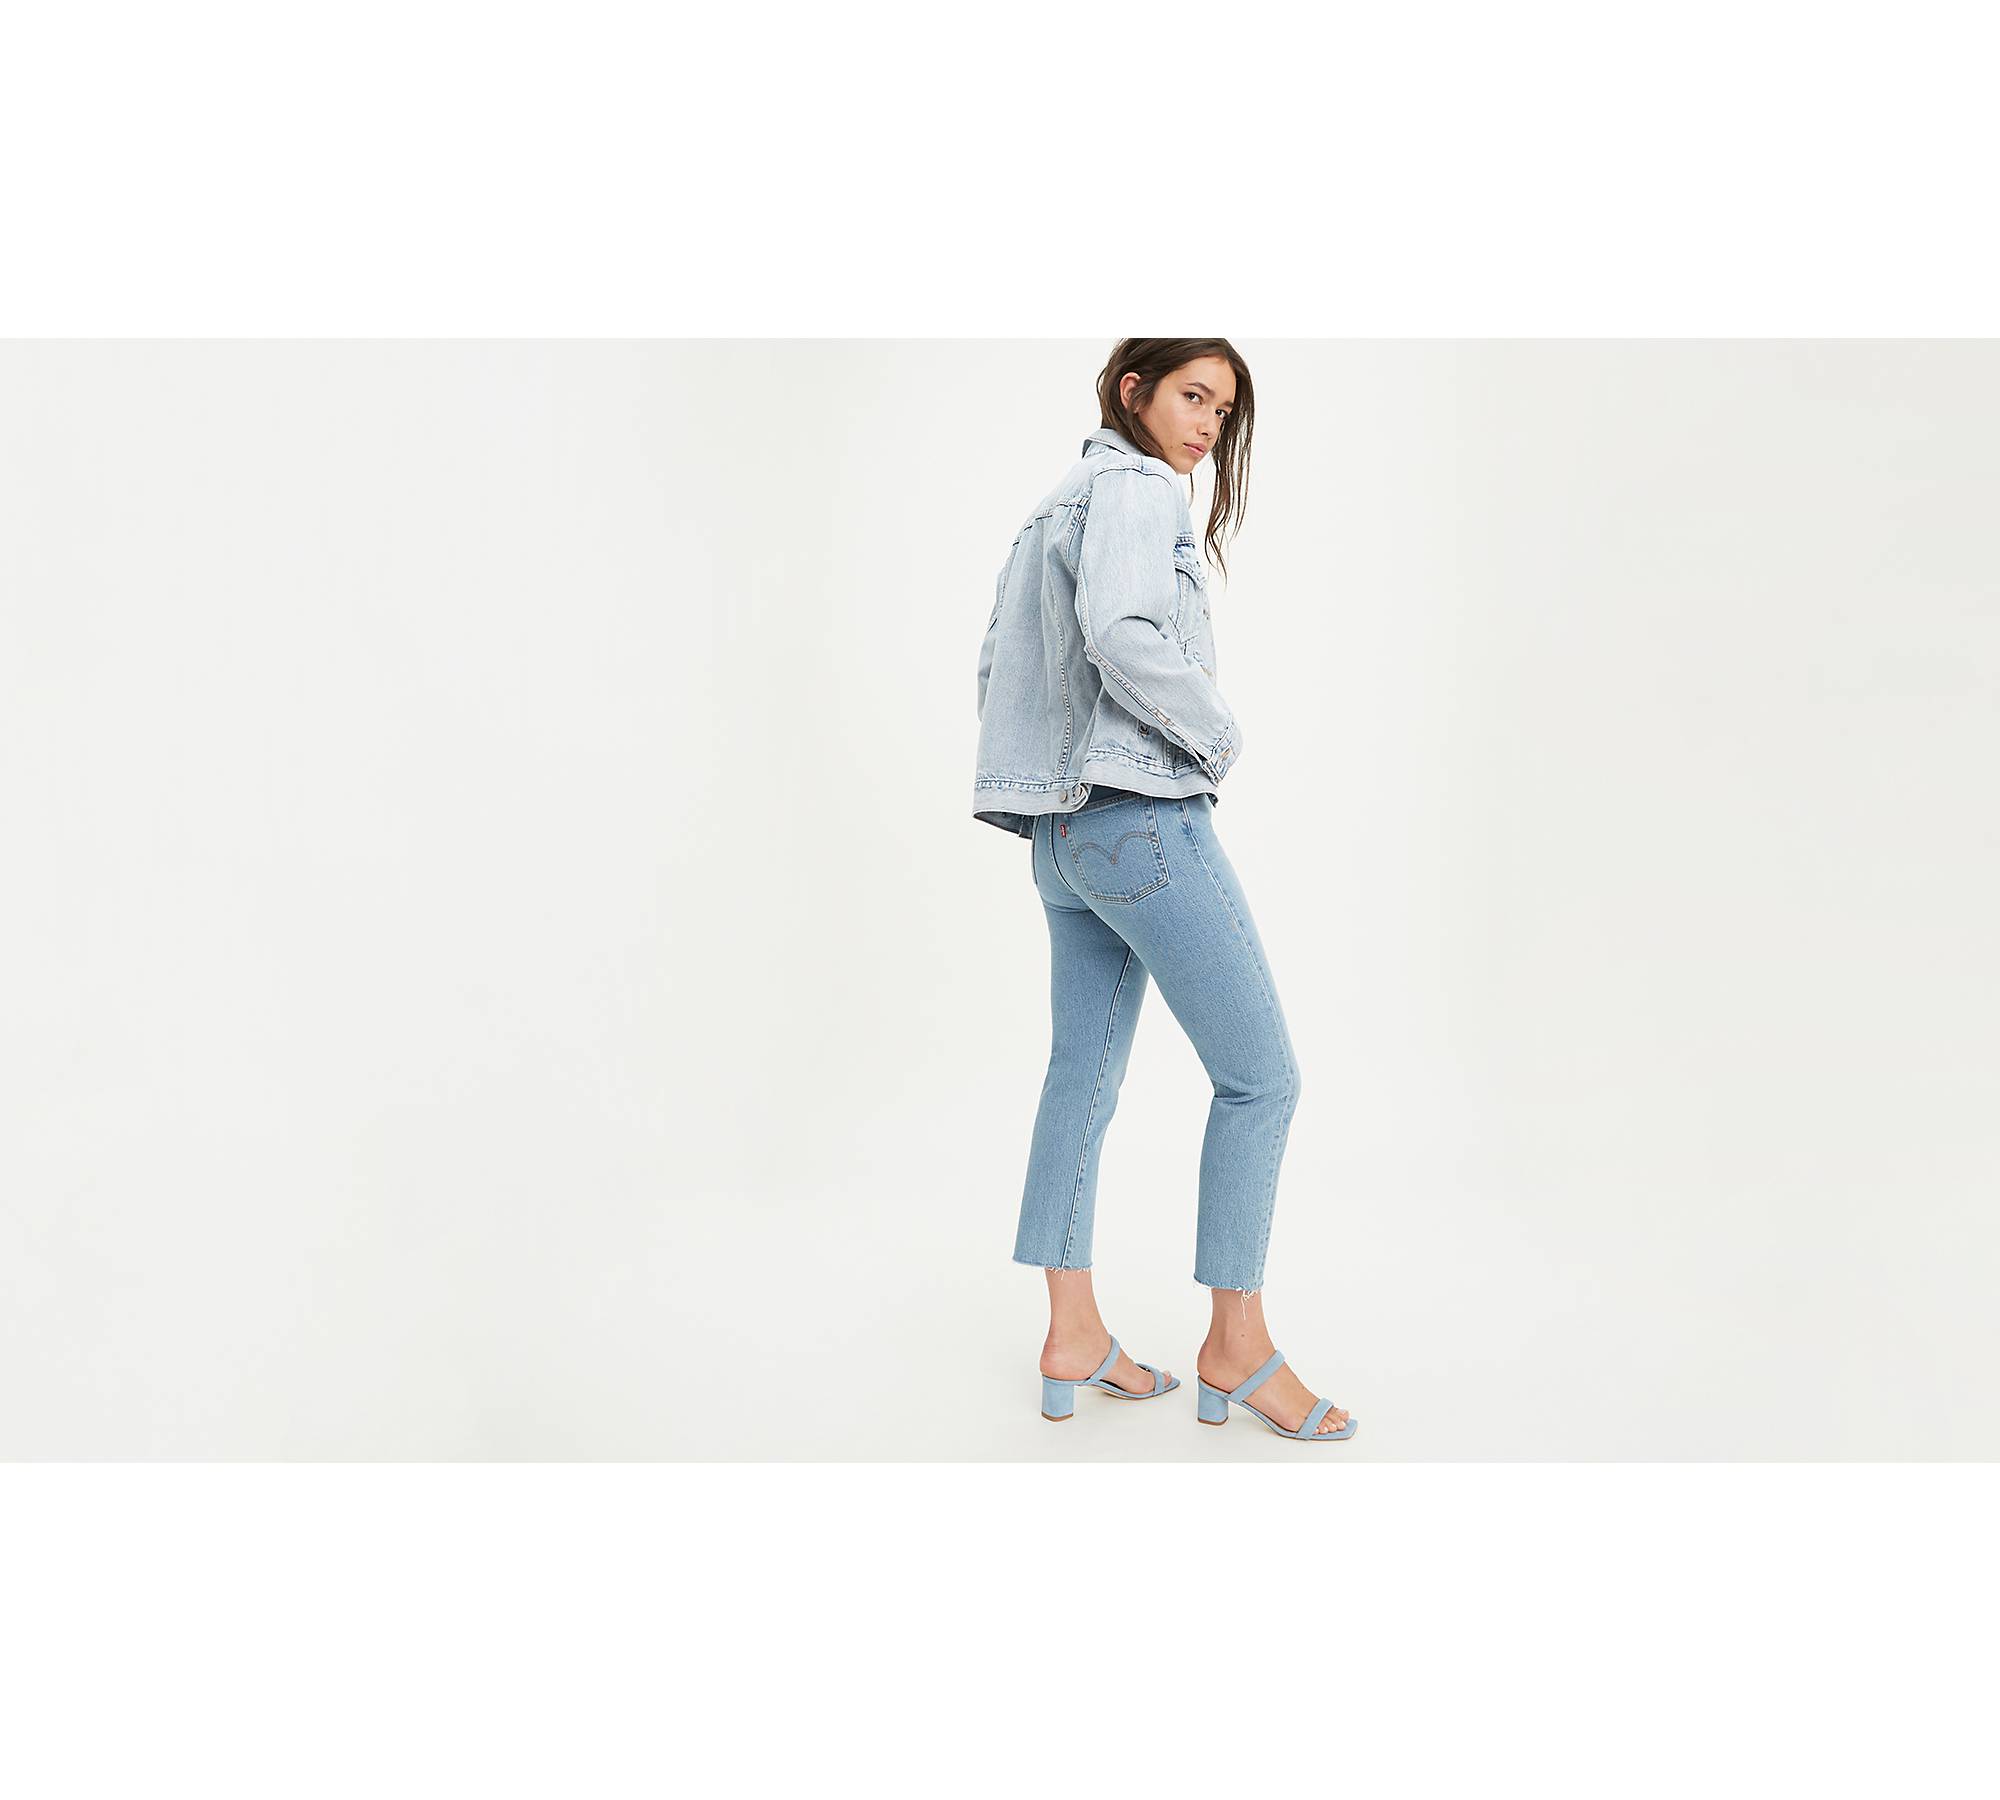 Buy Clovia Comfort-Fit High Waist Flared Yoga Pants -Pink online